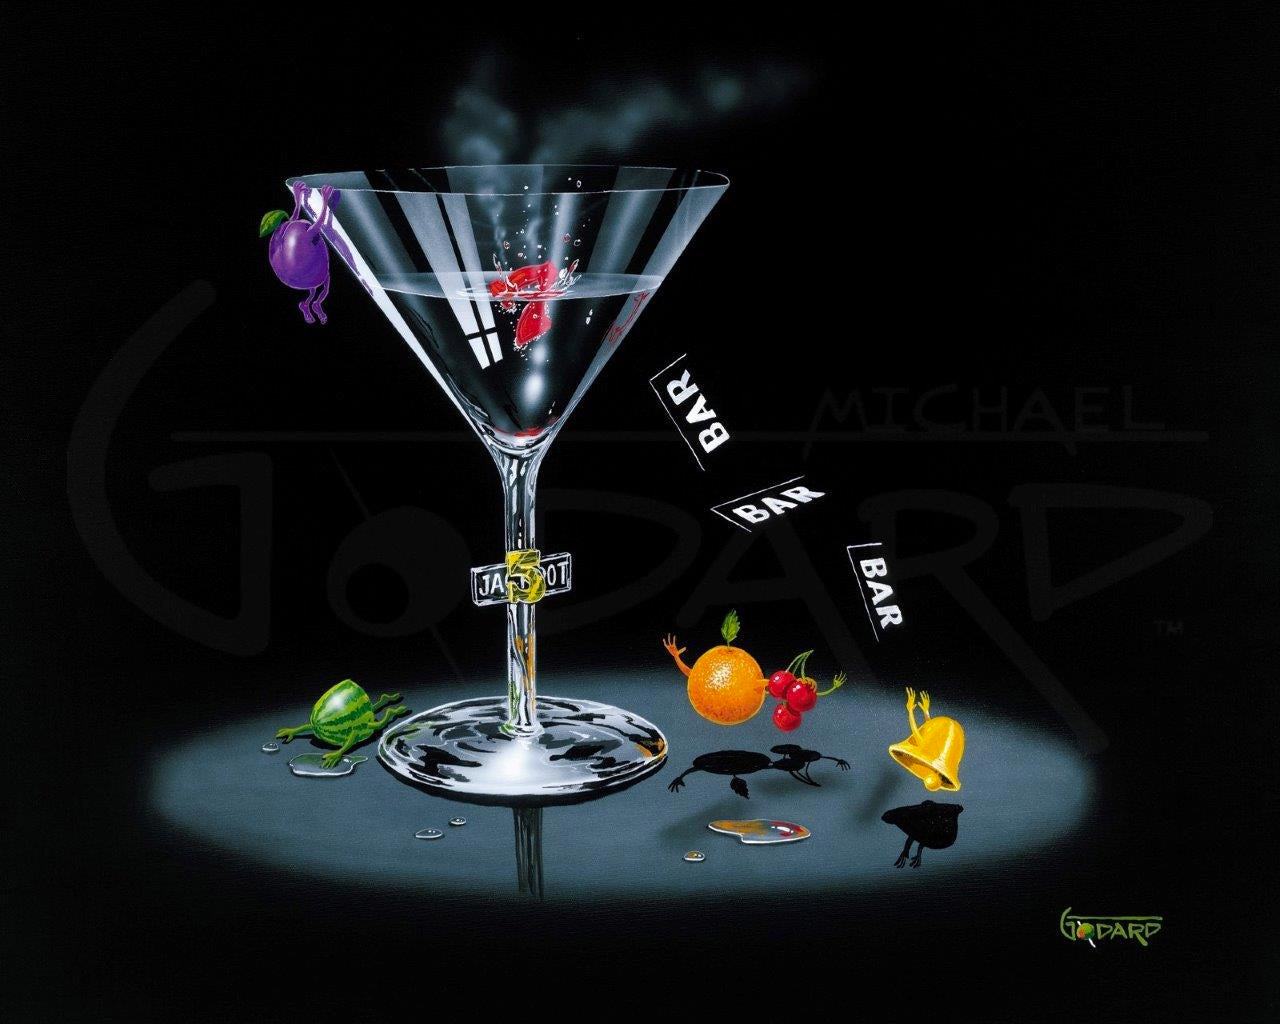 Michael Godard "Bar None" Limited Edition Canvas Giclee